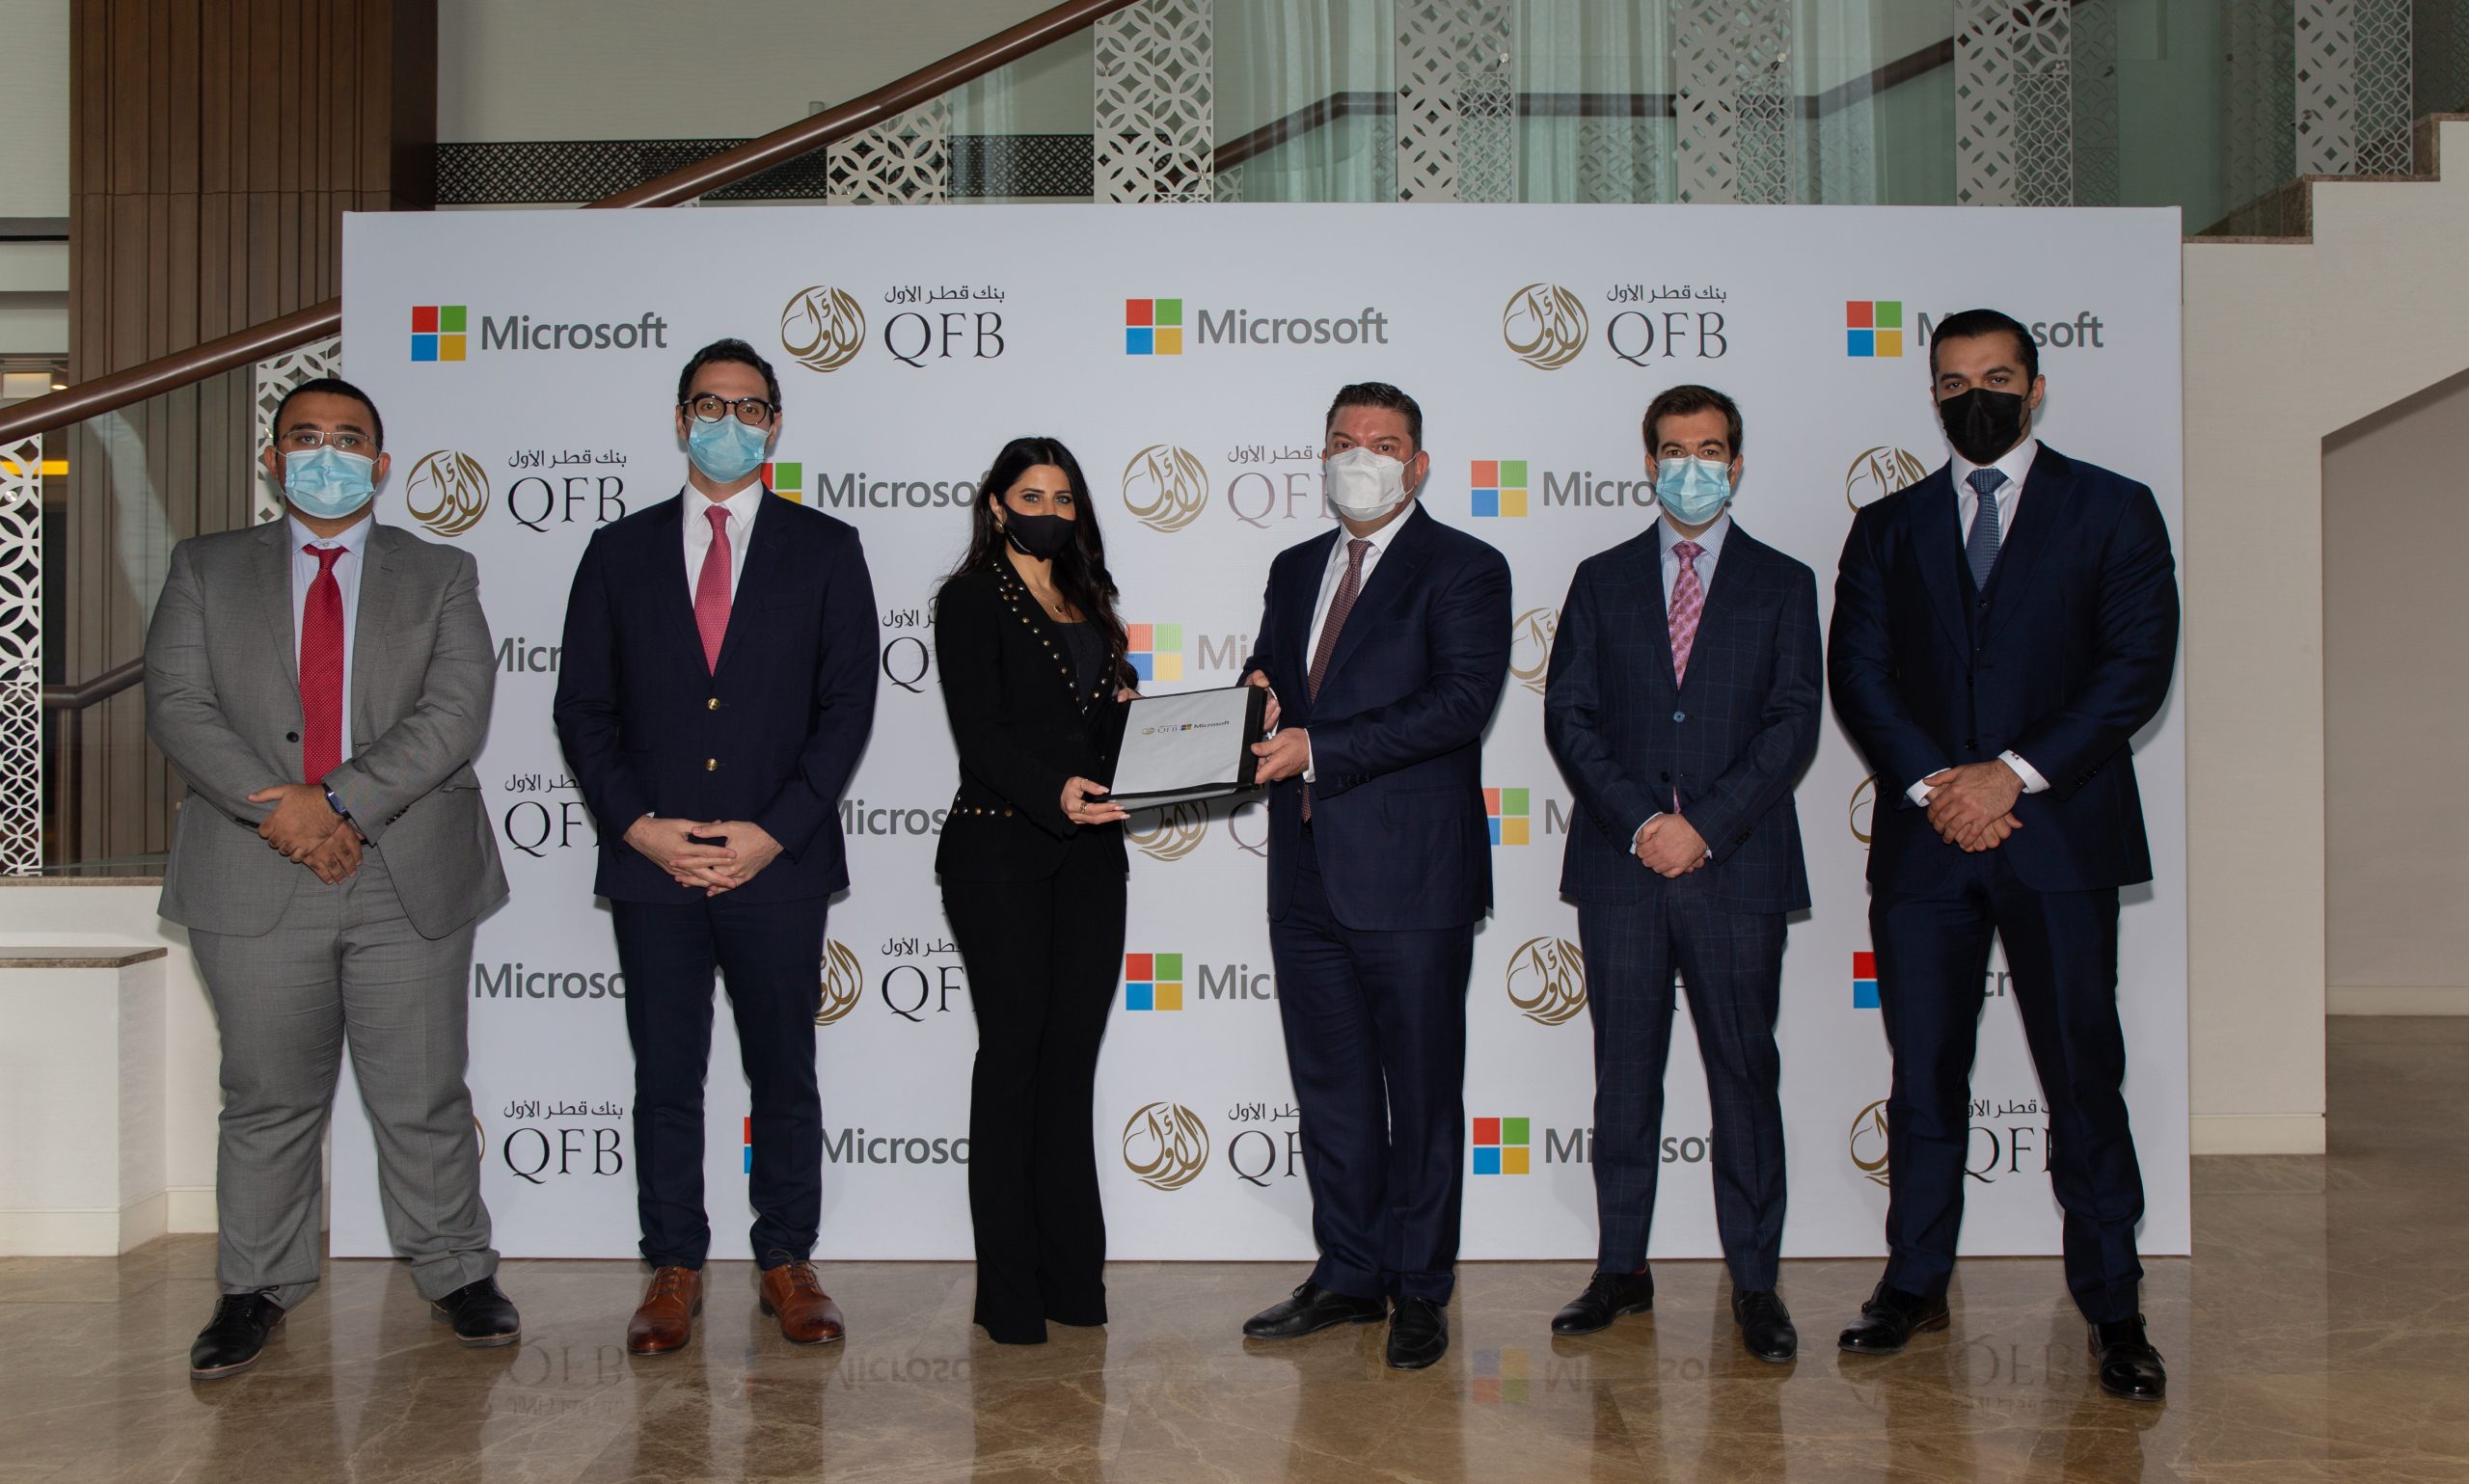 QFB Microsoft qatar